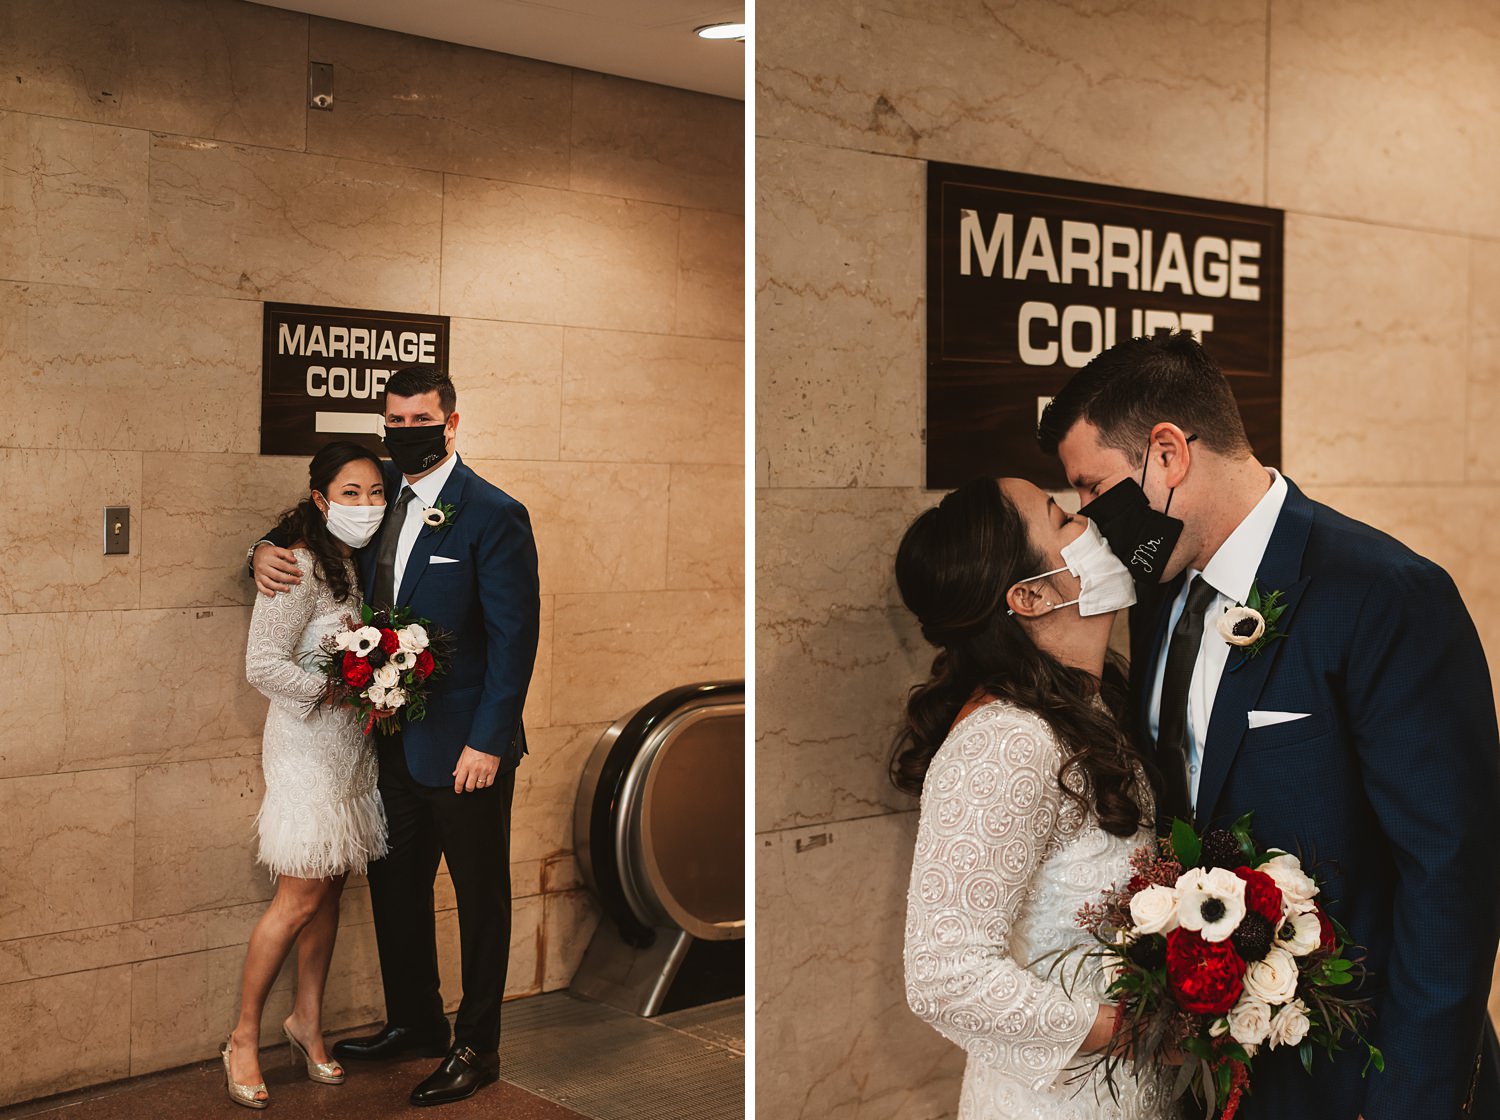 Chicago Courthouse Elopement wedding - The Adamkovi